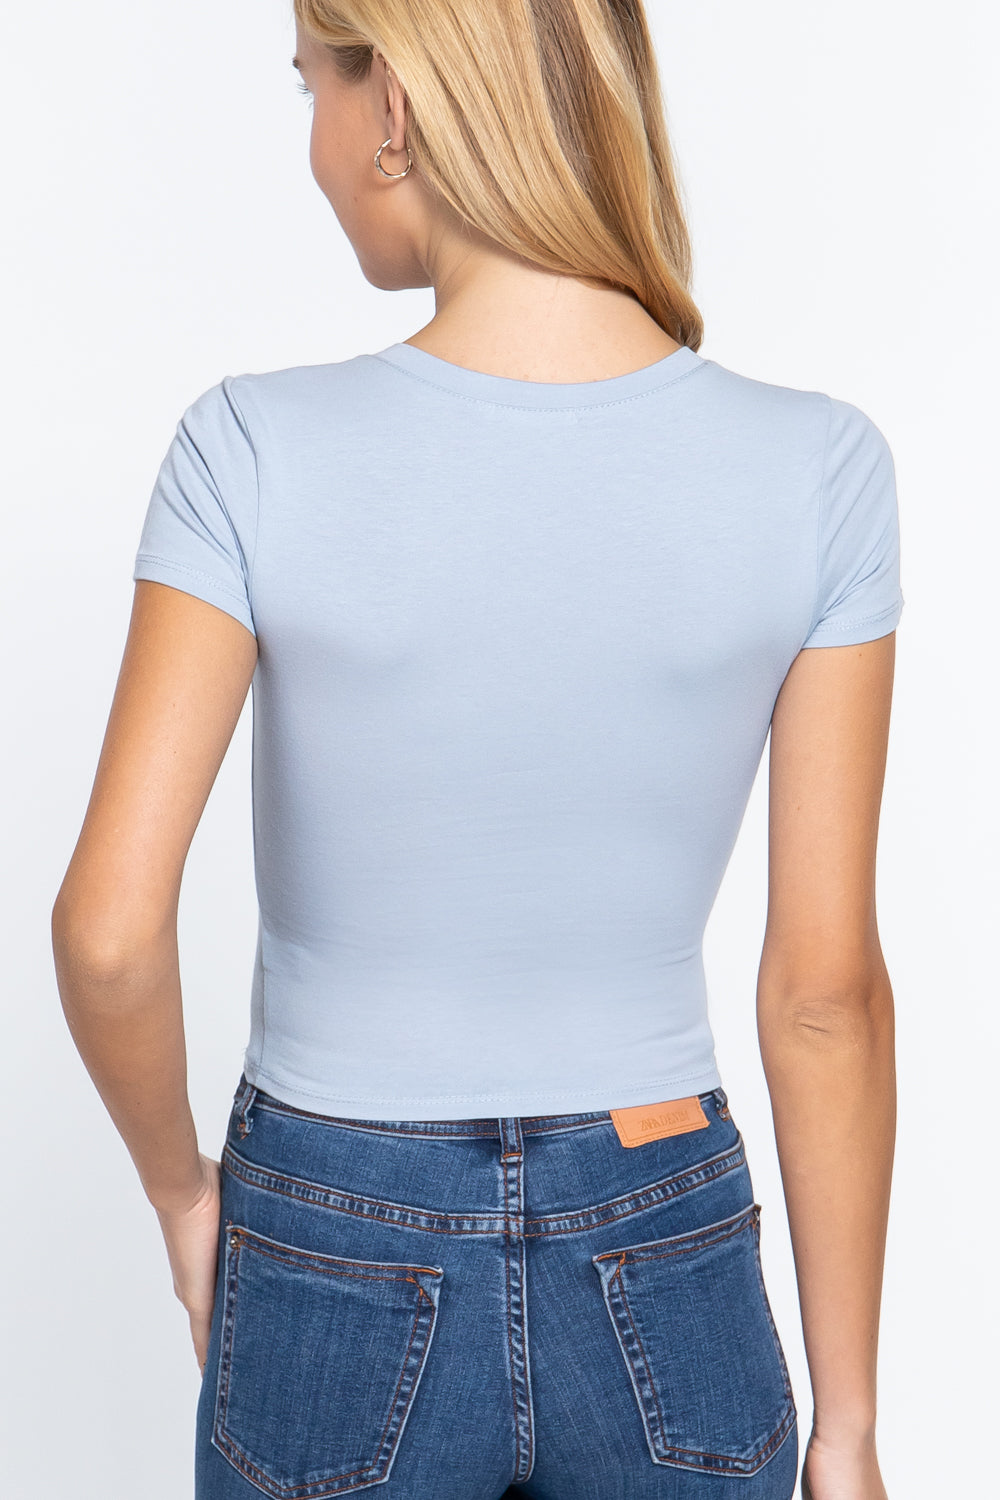 Short Sleeve V-neck Crop Blue Top Shirts & Tops jehouze 